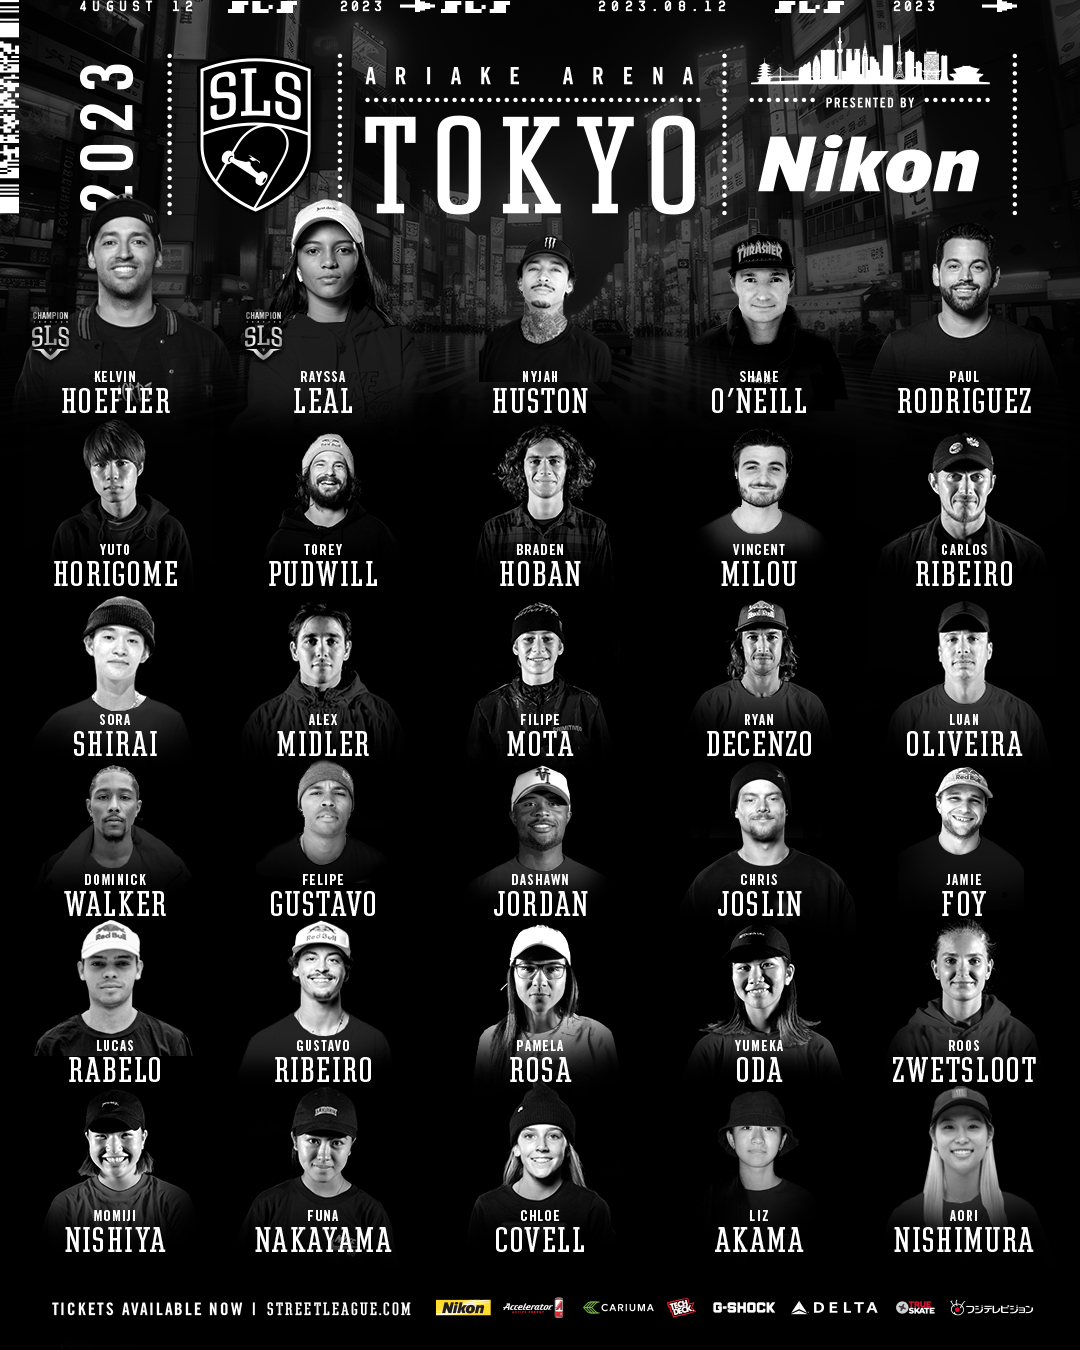 2023 SLS CHAMPIONSHIP TOUR ー TOKYO presented by Nikon